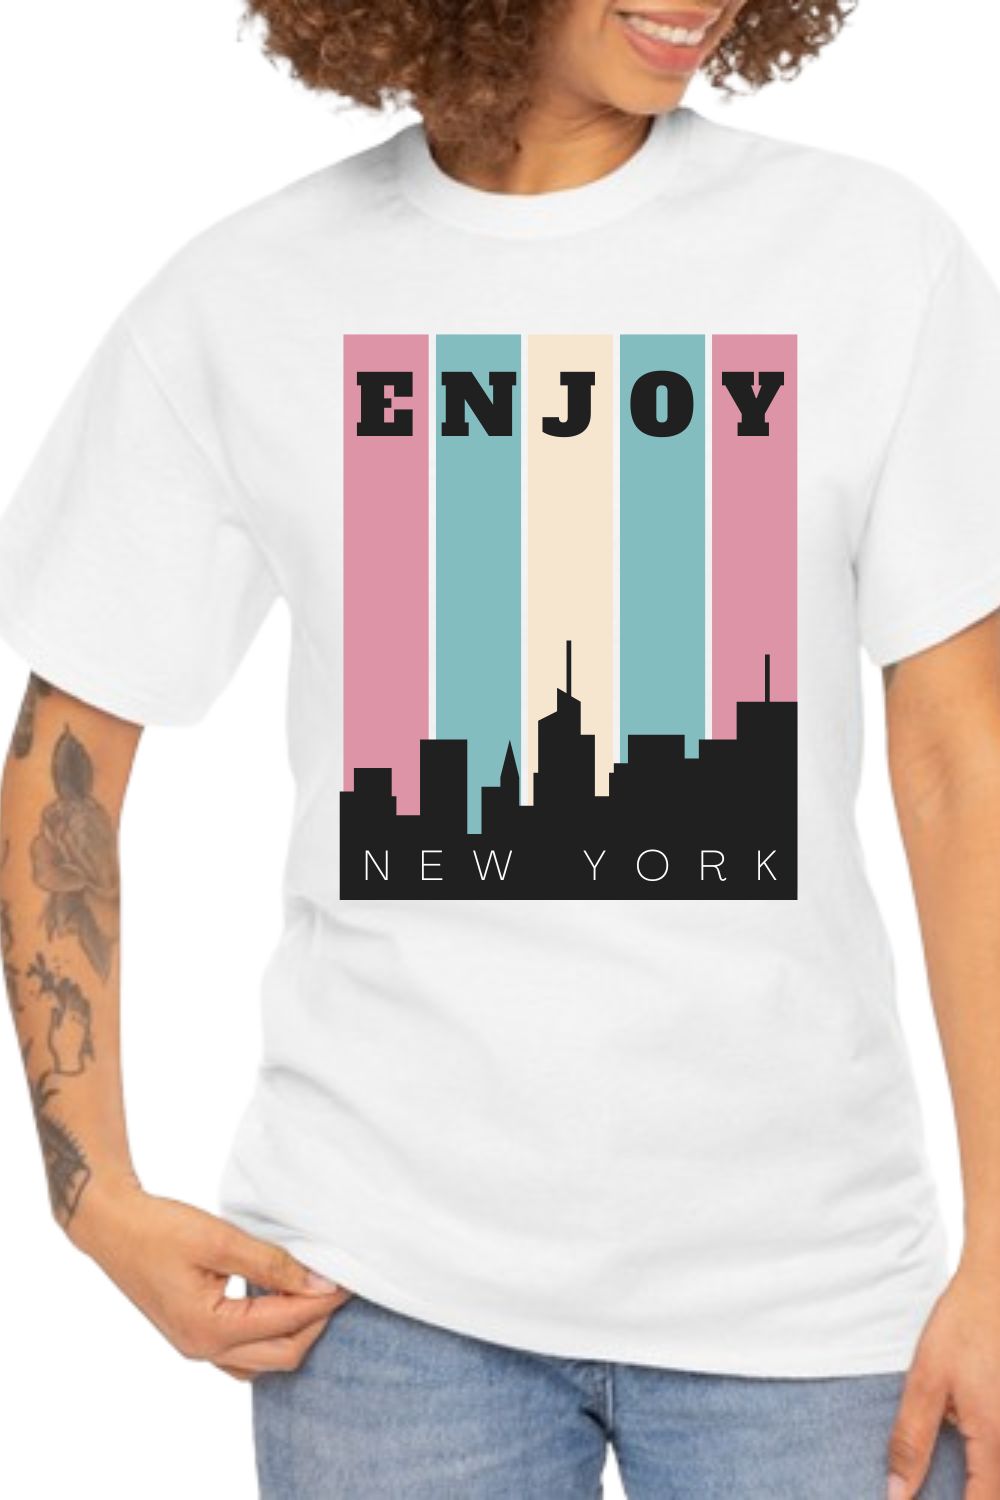 Elegant design "Enjoy New York" pinterest preview image.